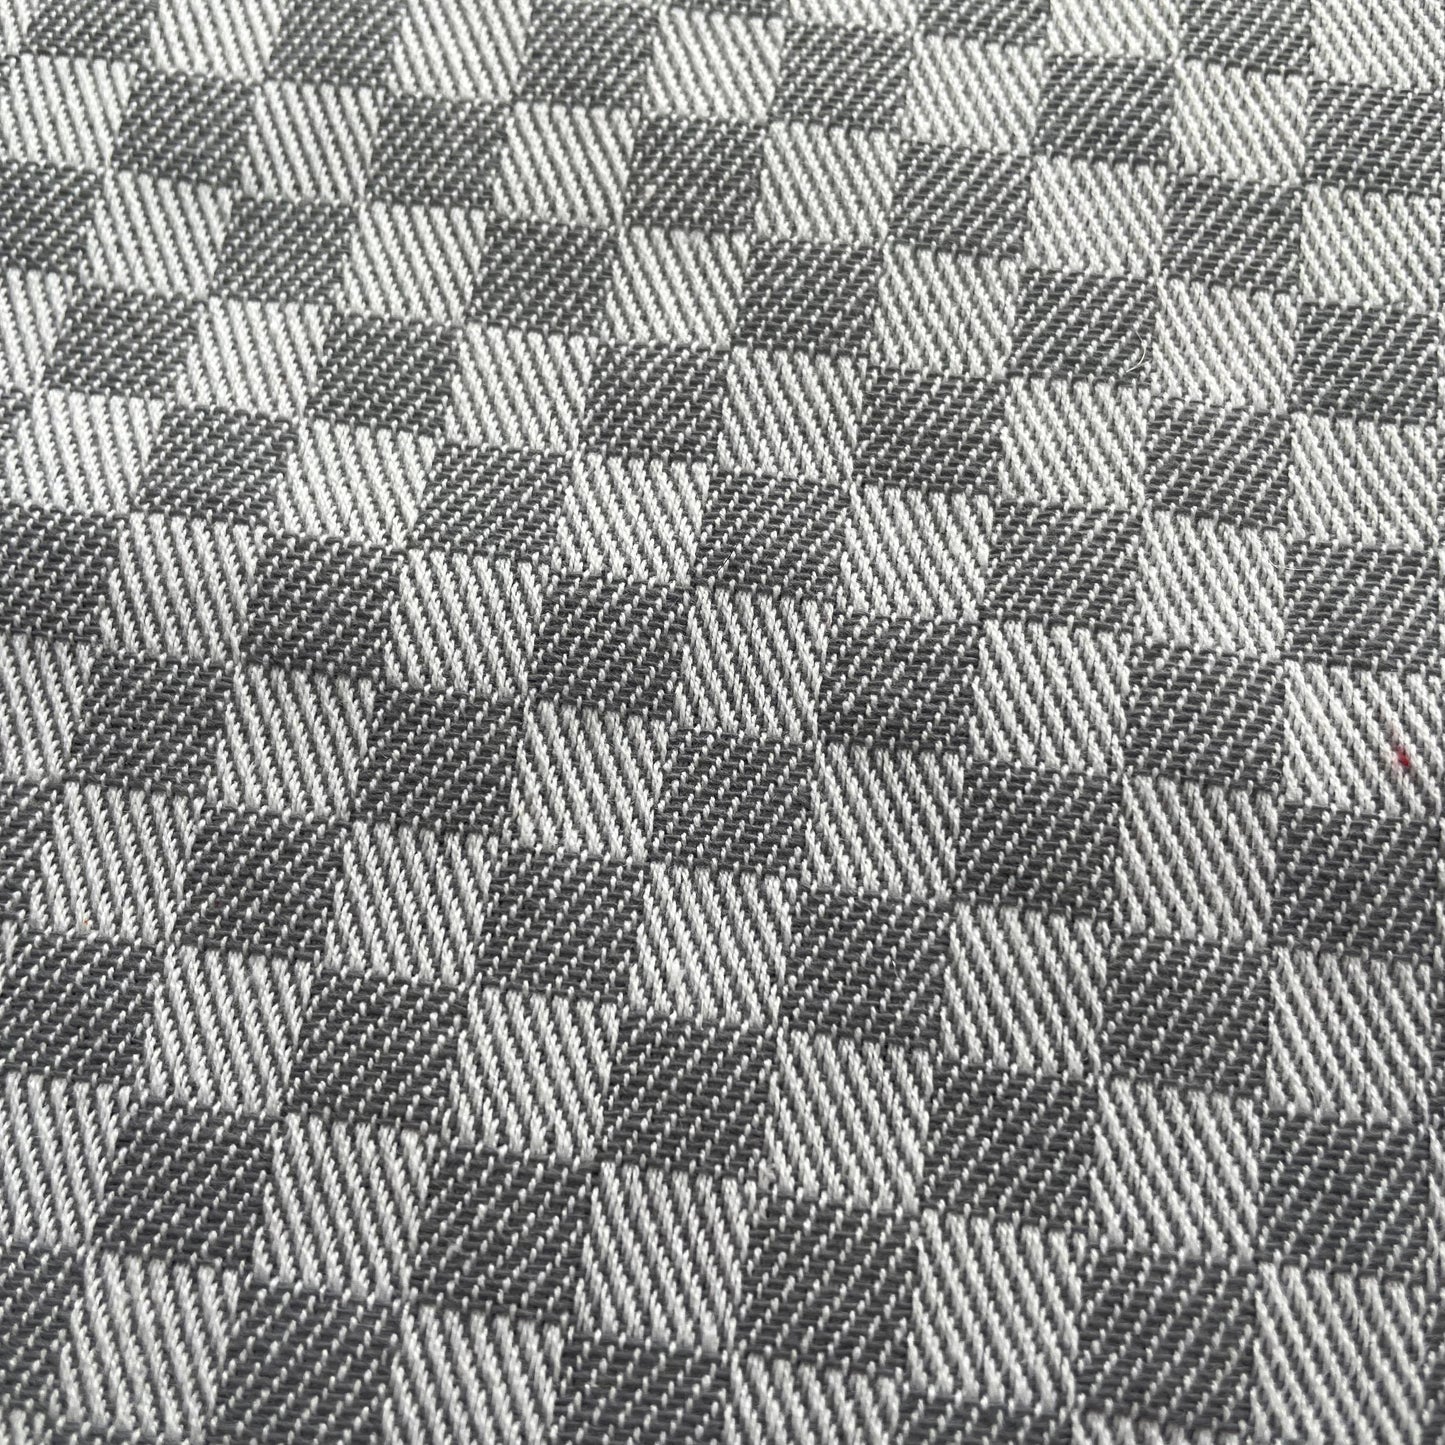 20 inch square grey check 100% cotton napkins - set of 4